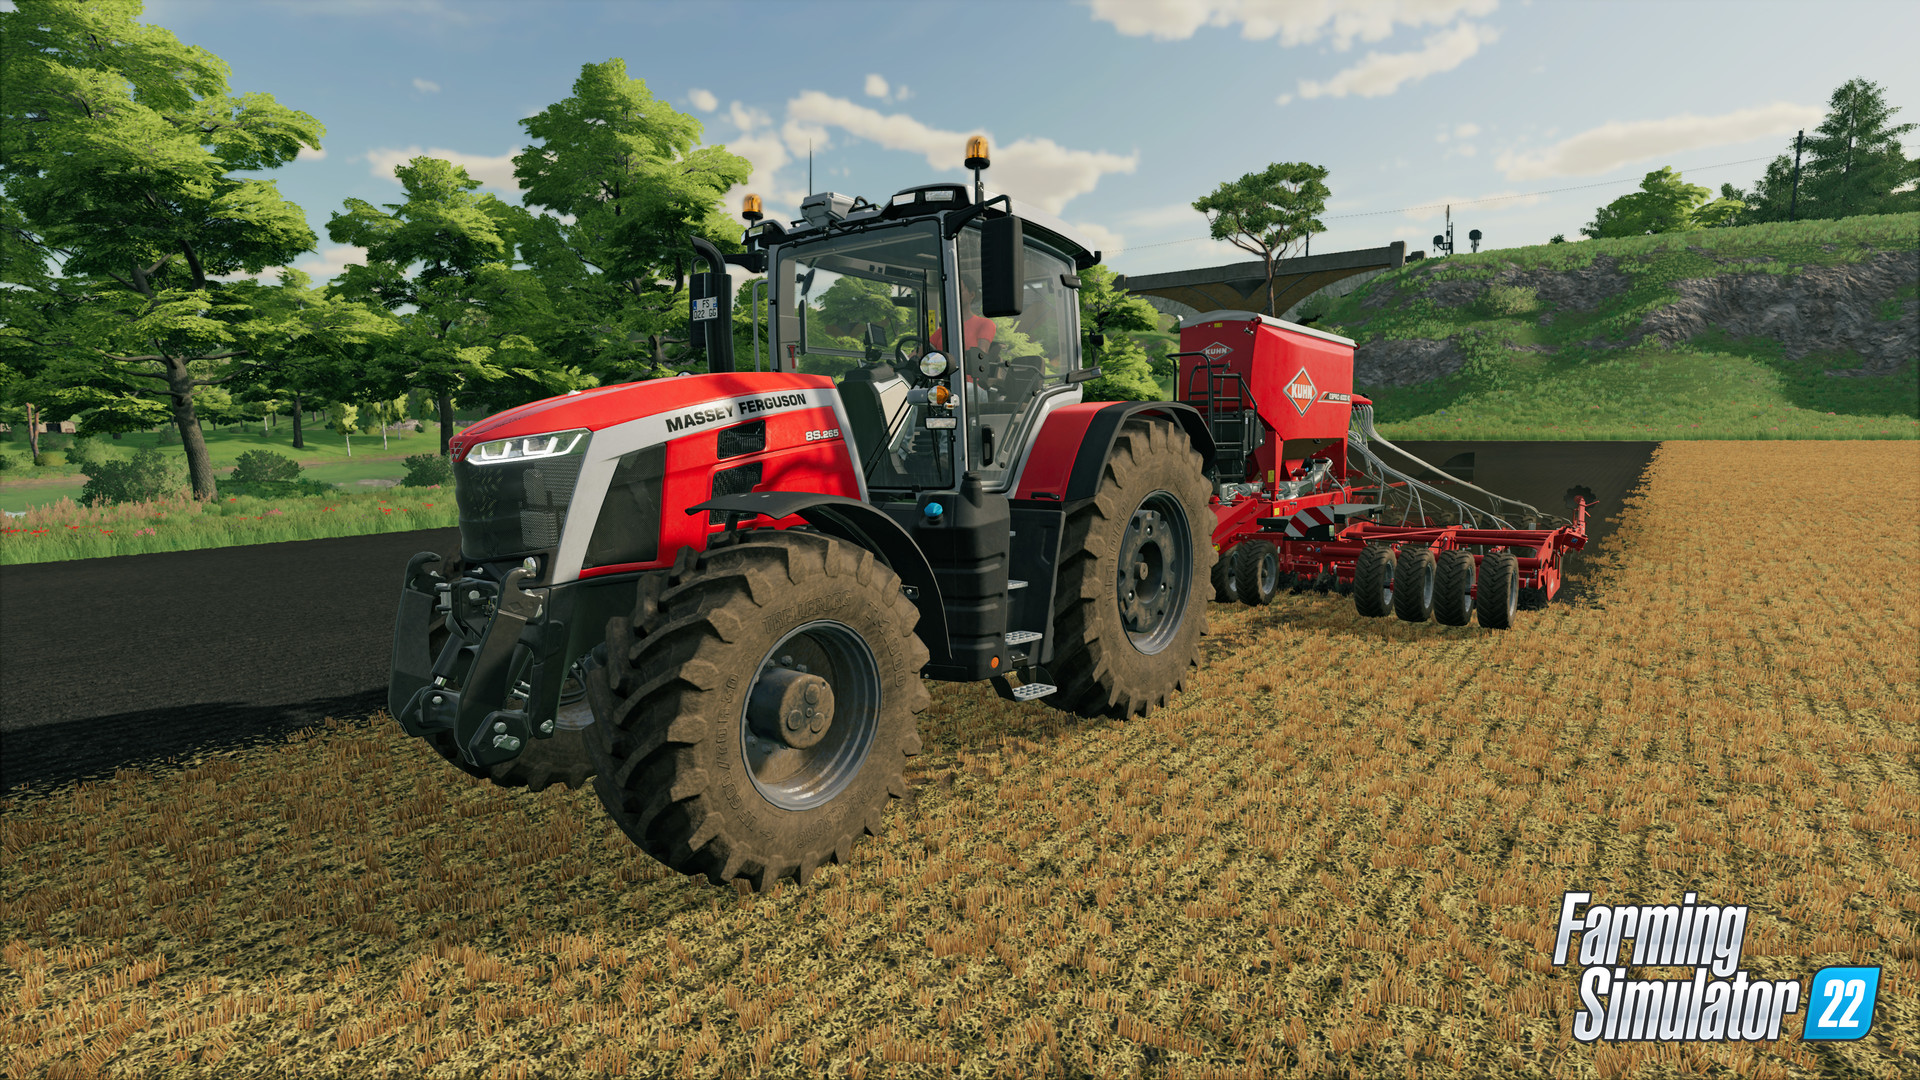 Farming Simulator 22 - Year 1 Season Pass DLC LATAM Steam CD Key